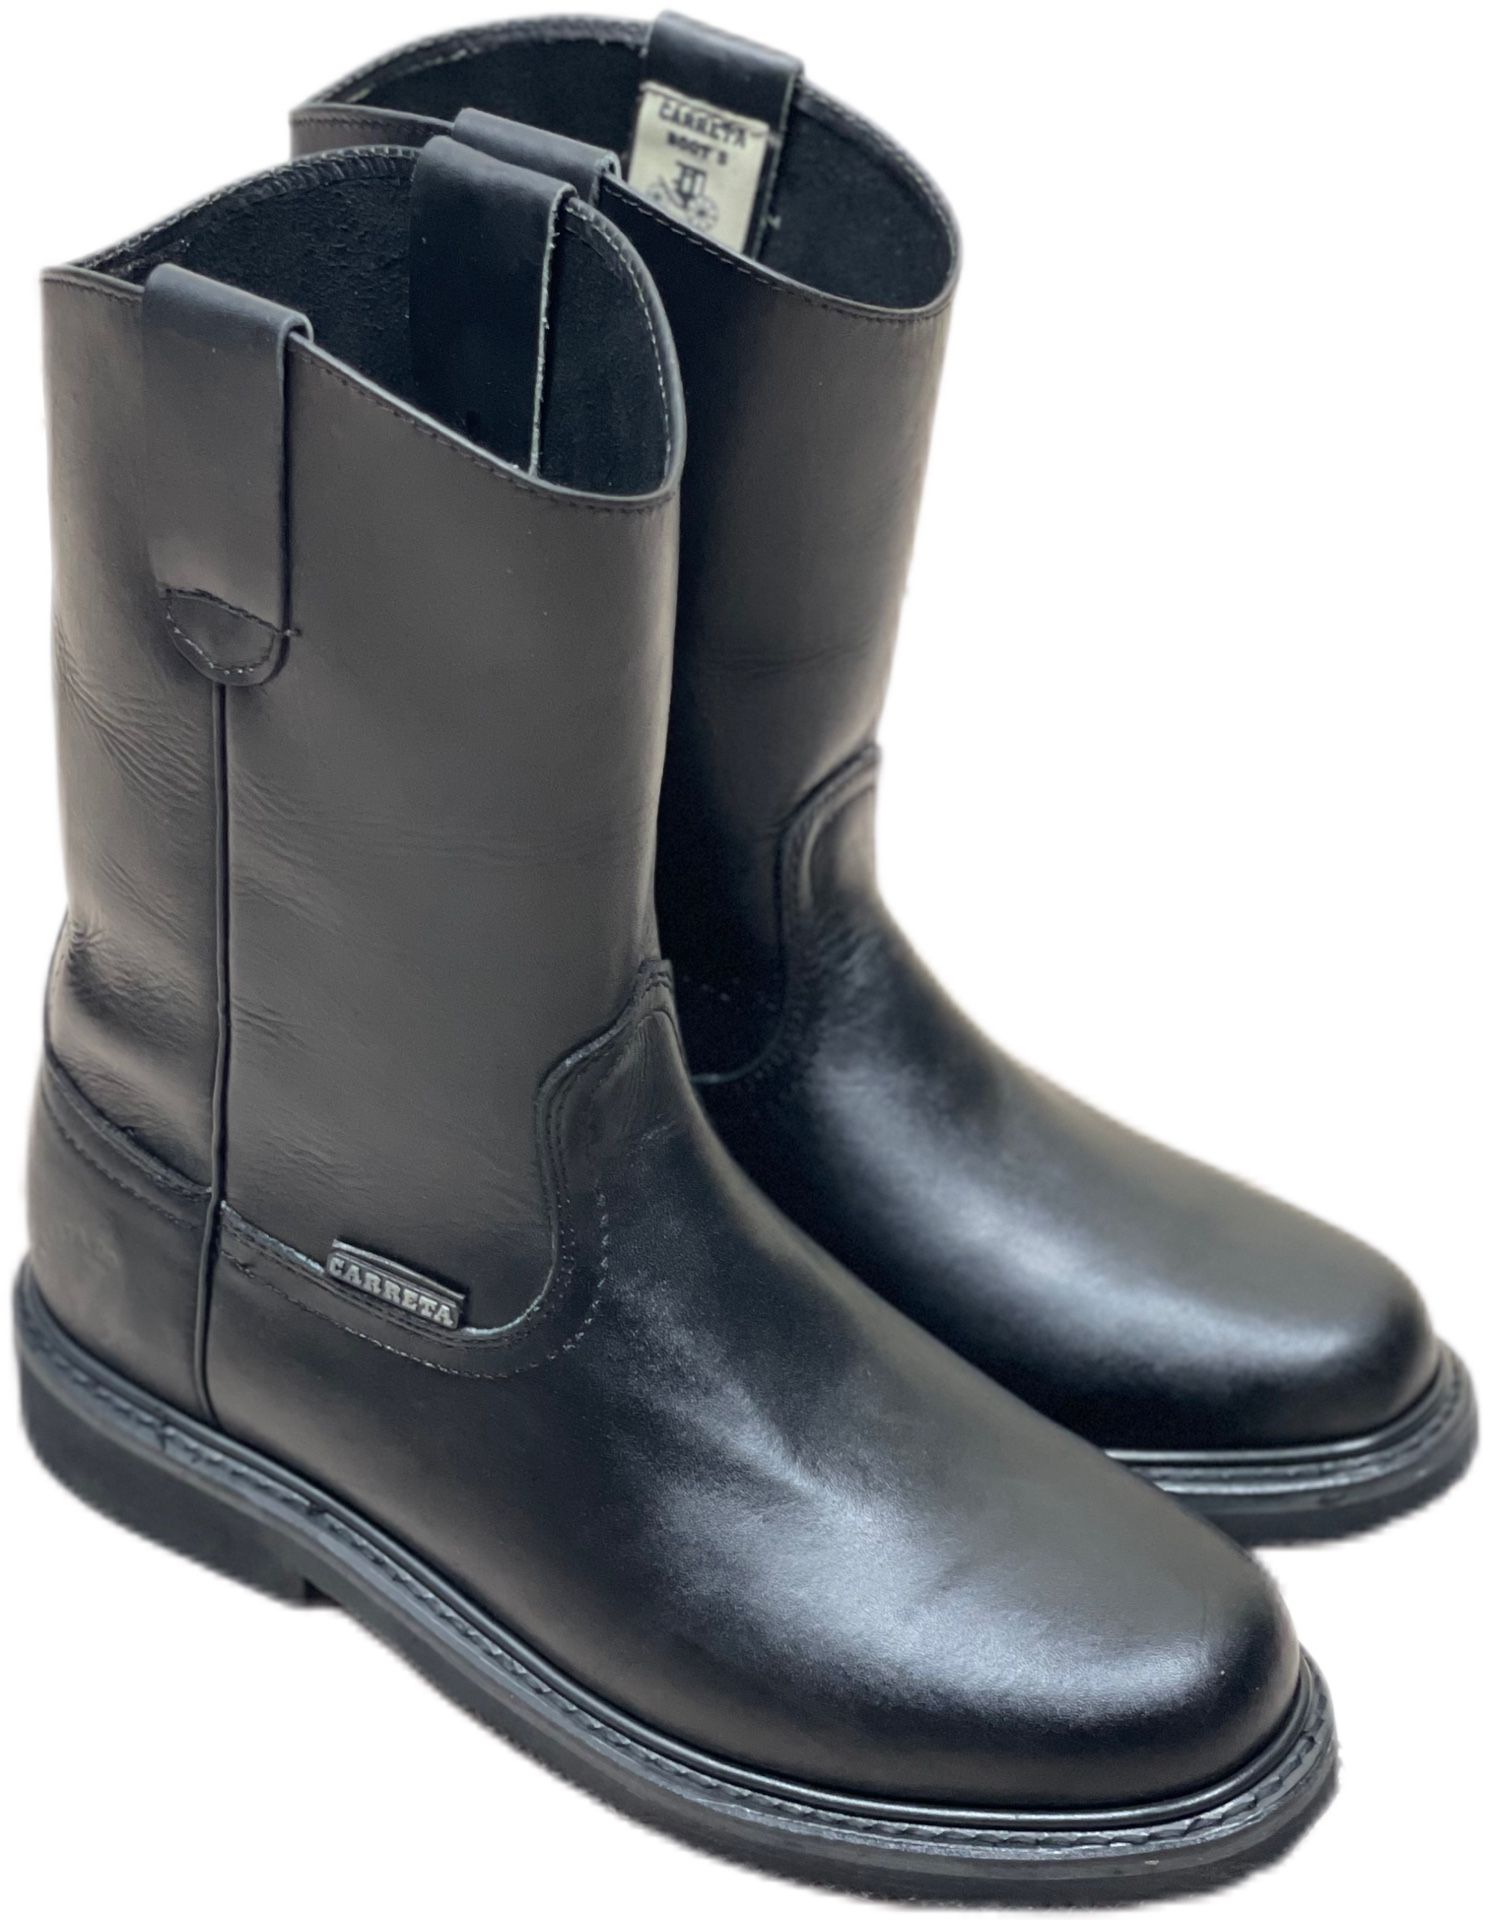 Bota De Trabajo De Piel/ Leather Work Boots 